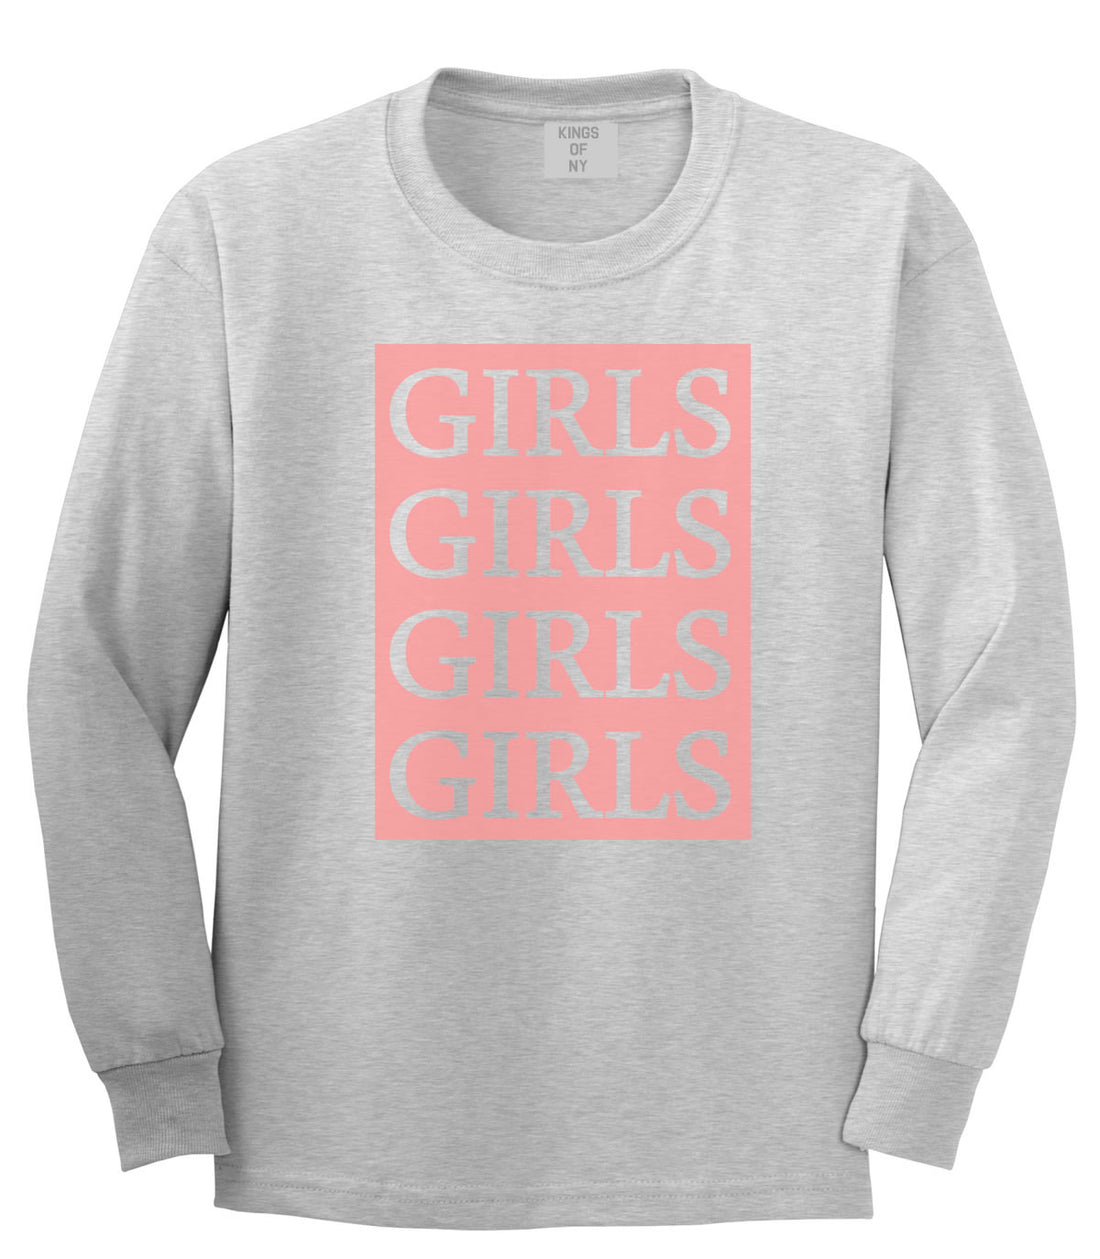 Girls Girls Girls Long Sleeve T-Shirt in Grey by Kings Of NY